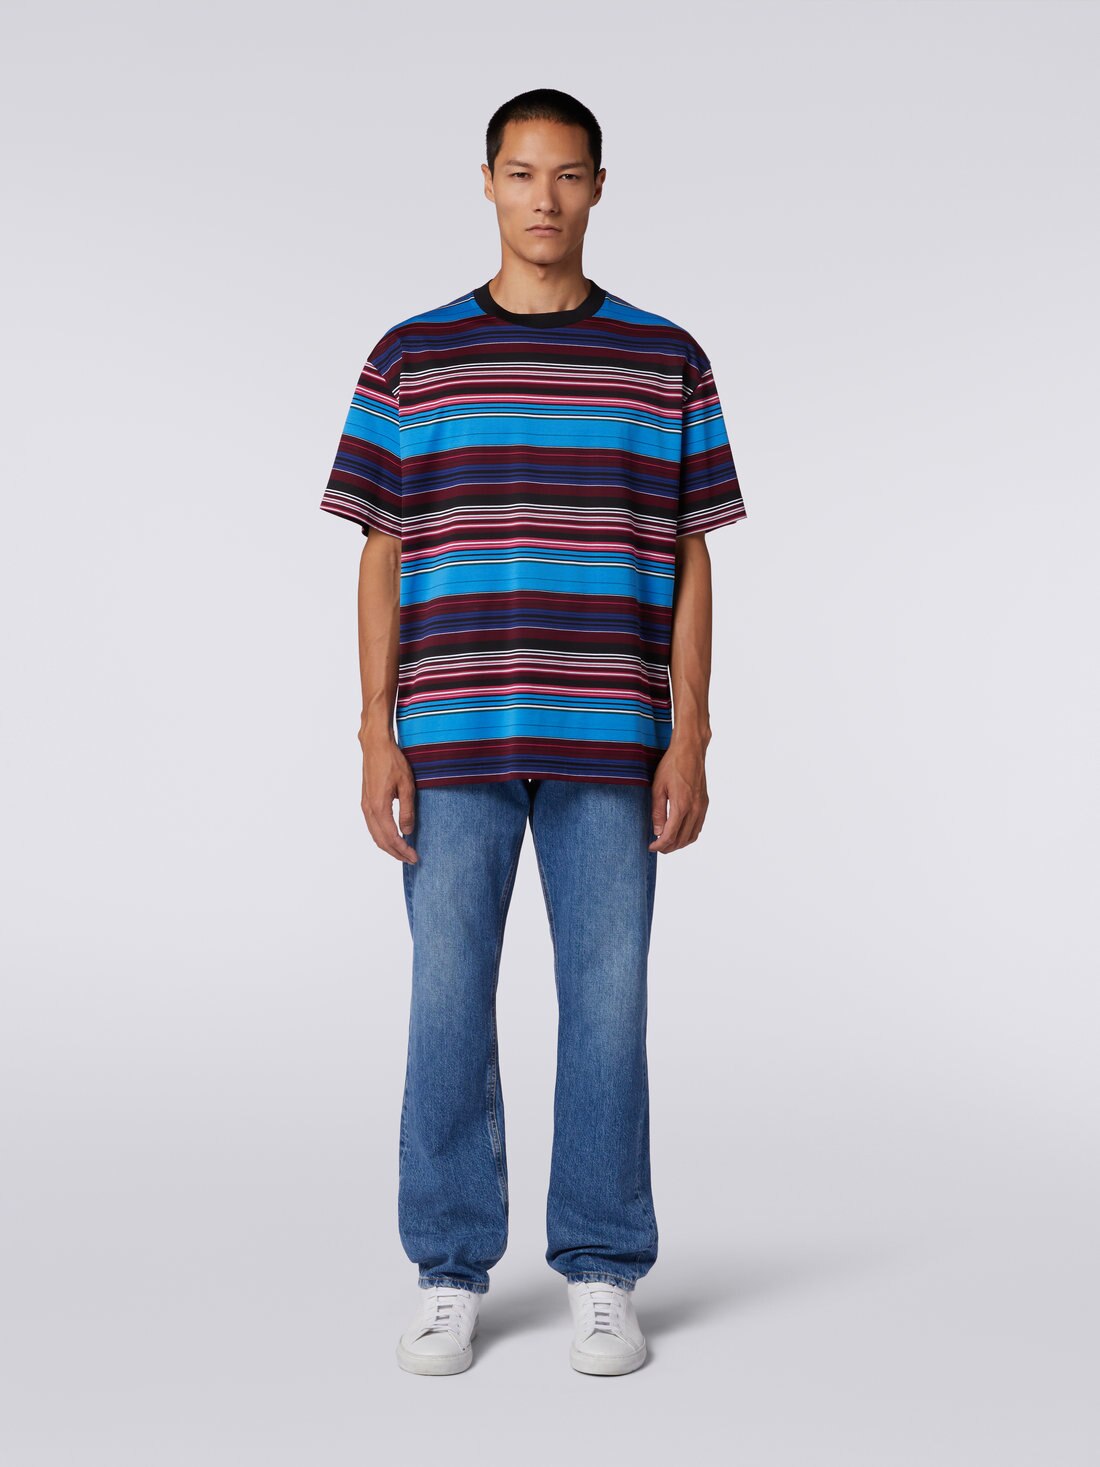 Striped cotton jersey T-shirt, Multicoloured  - US23WL06BJ00GOSM8Z6 - 1